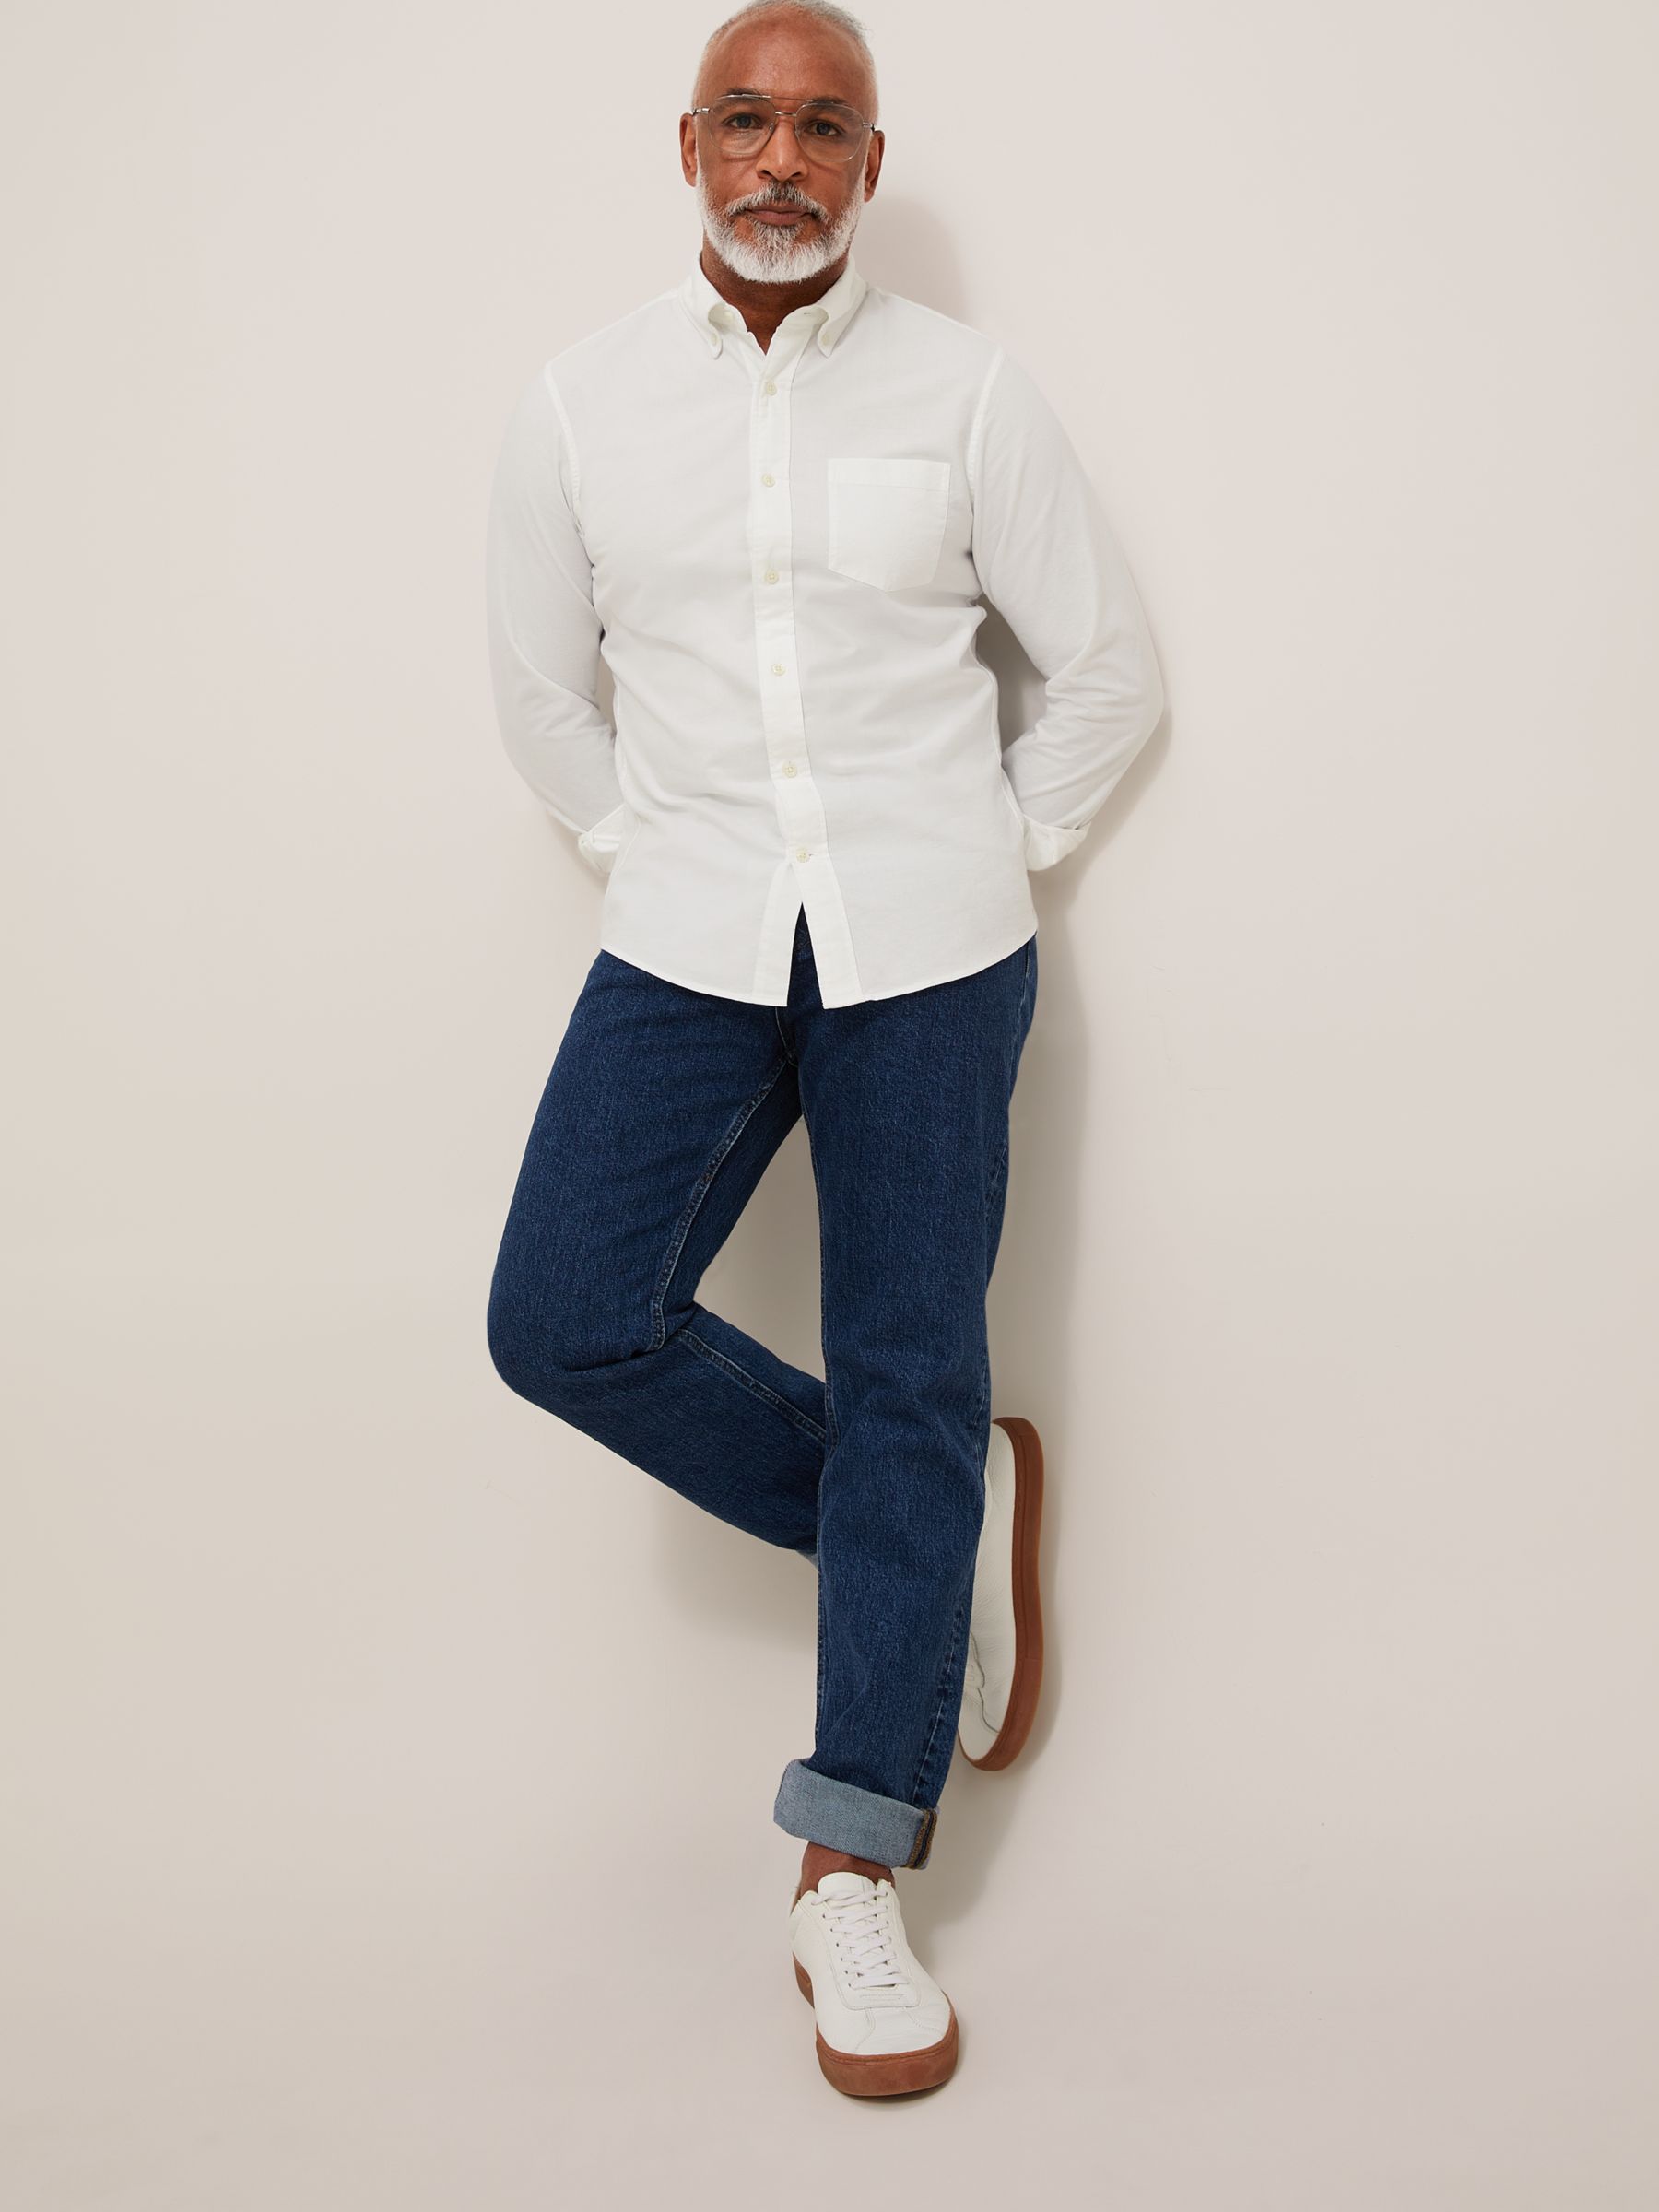 John Lewis Regular Fit Cotton Oxford Button Down Shirt, White, S